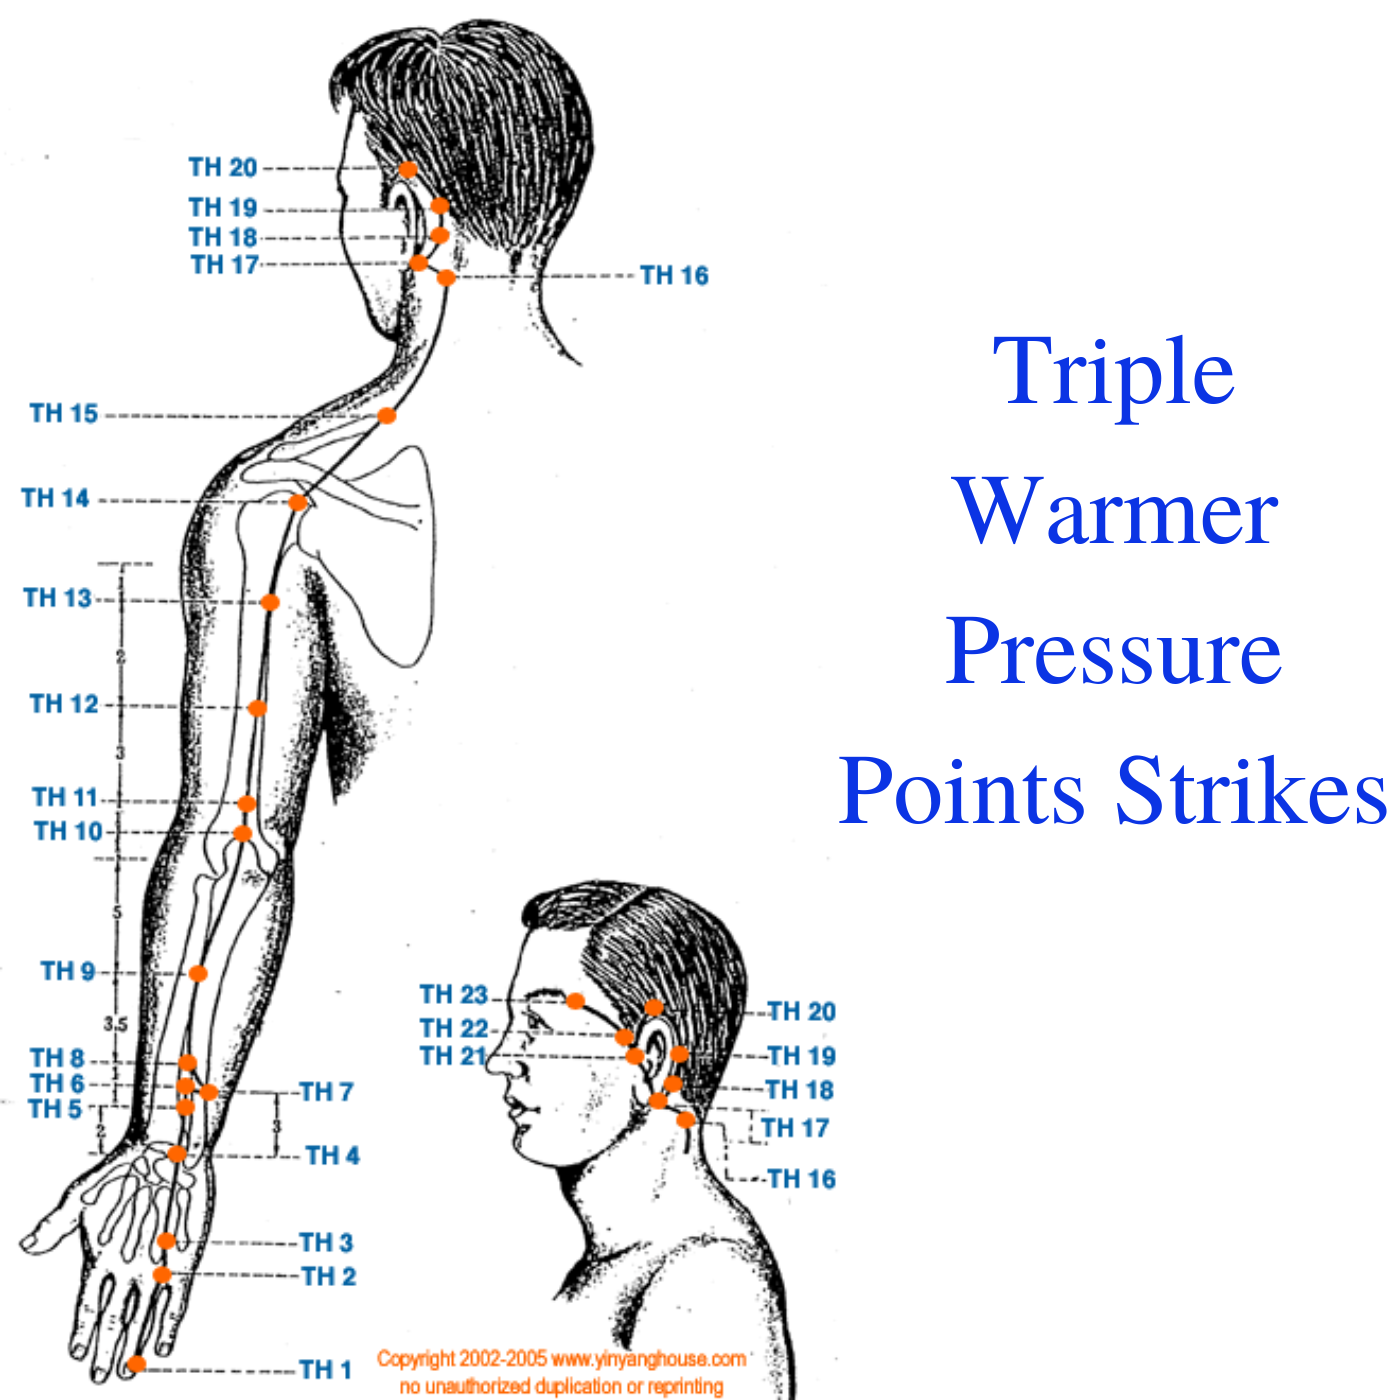 Triple Warmer Pressure Points Strikes